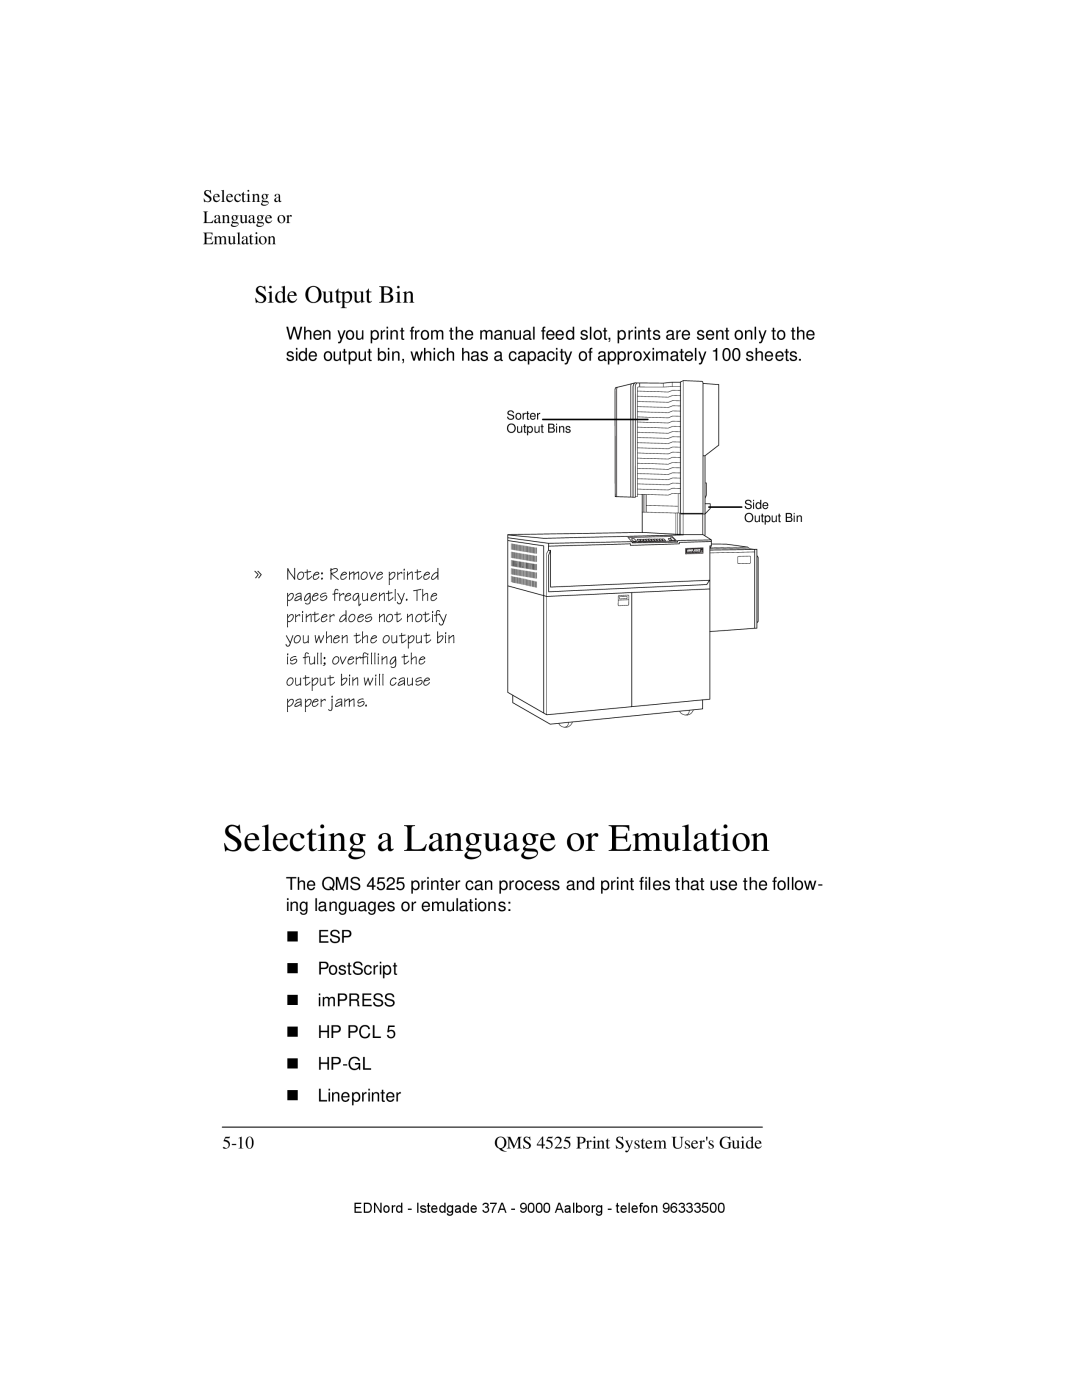 IBM QMS 4525 manual Selecting a Language or Emulation, Side Output Bin 